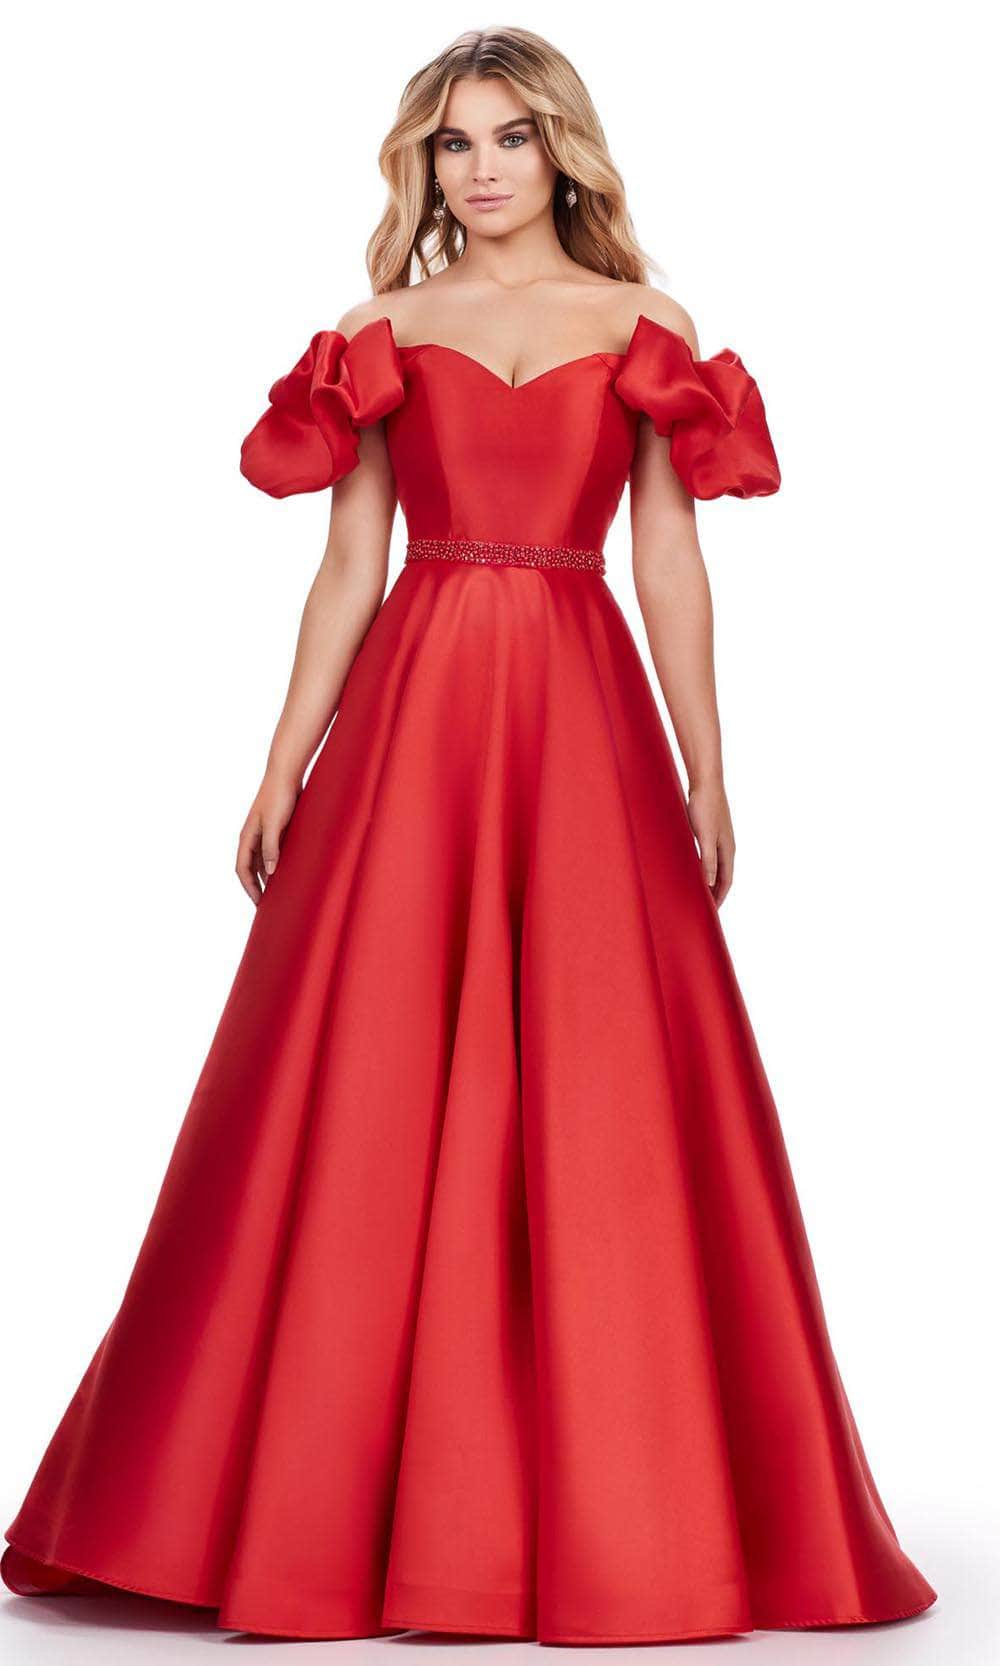 Ashley Lauren 11542 - Puff Sleeve Mikado Prom Dress 00 /  Red